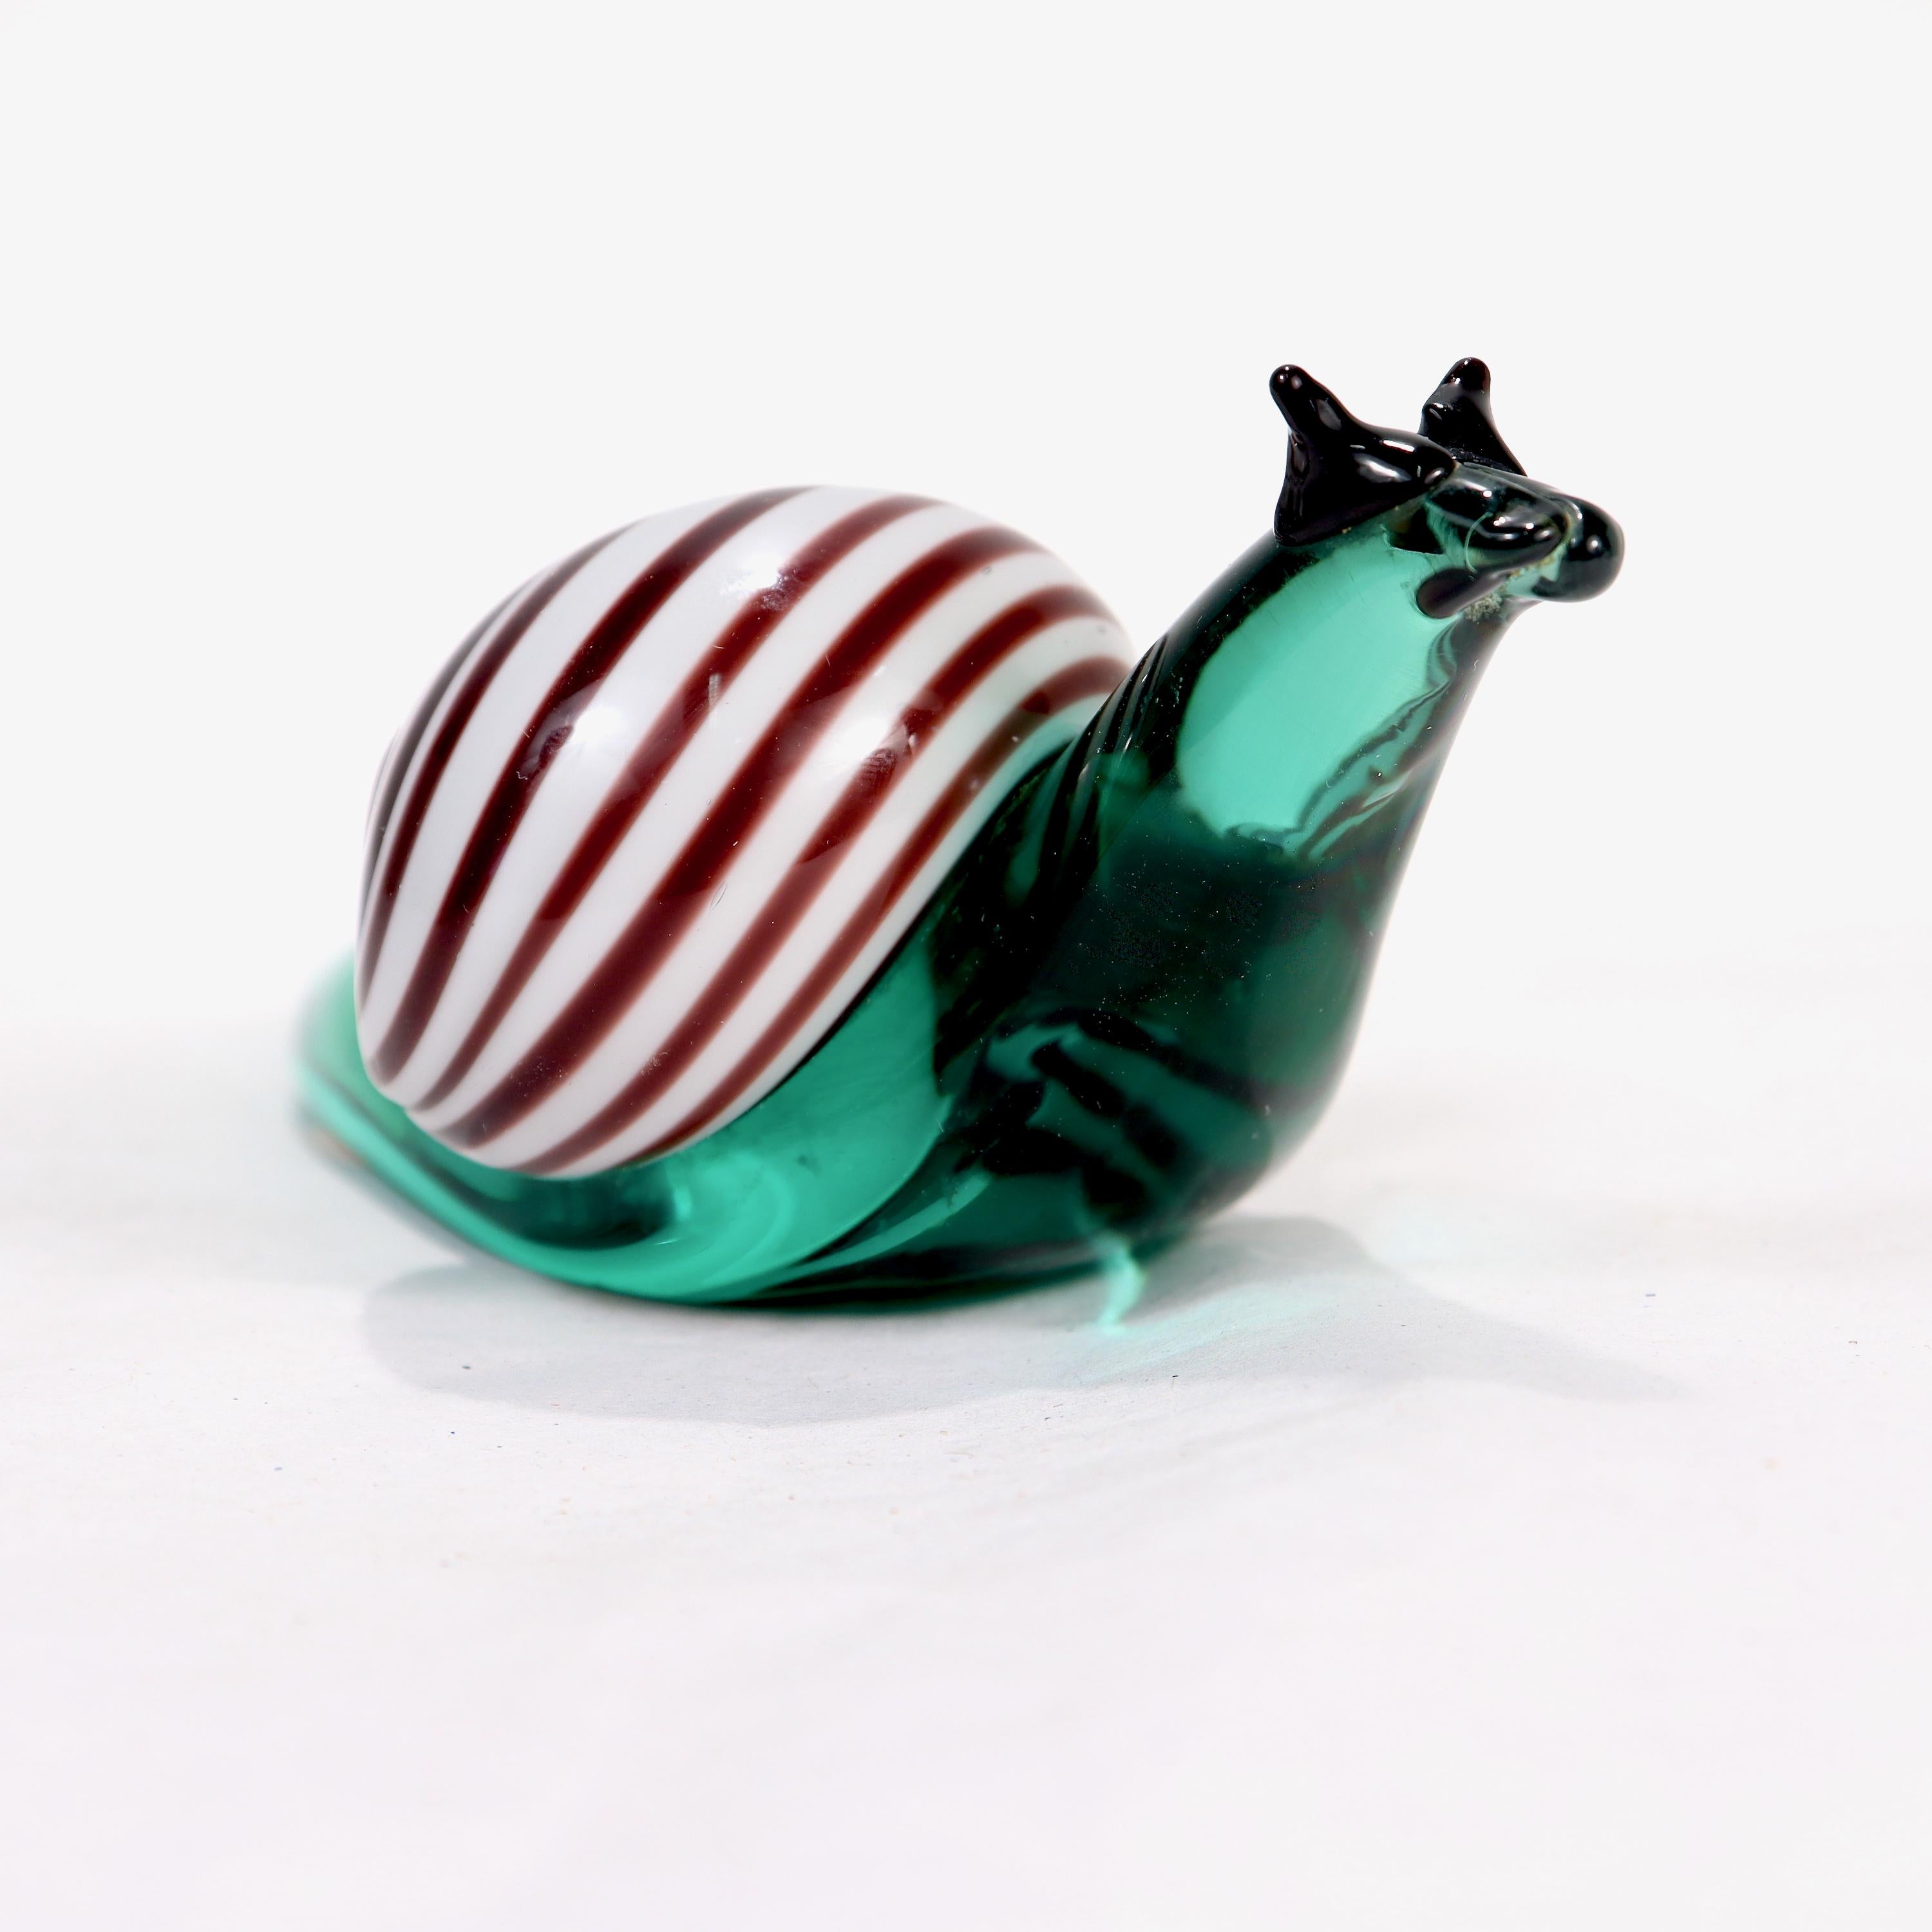 Italian Signed & Labeled Salviati Venetian / Murano Art Glass Snail Paperweight Figurine For Sale